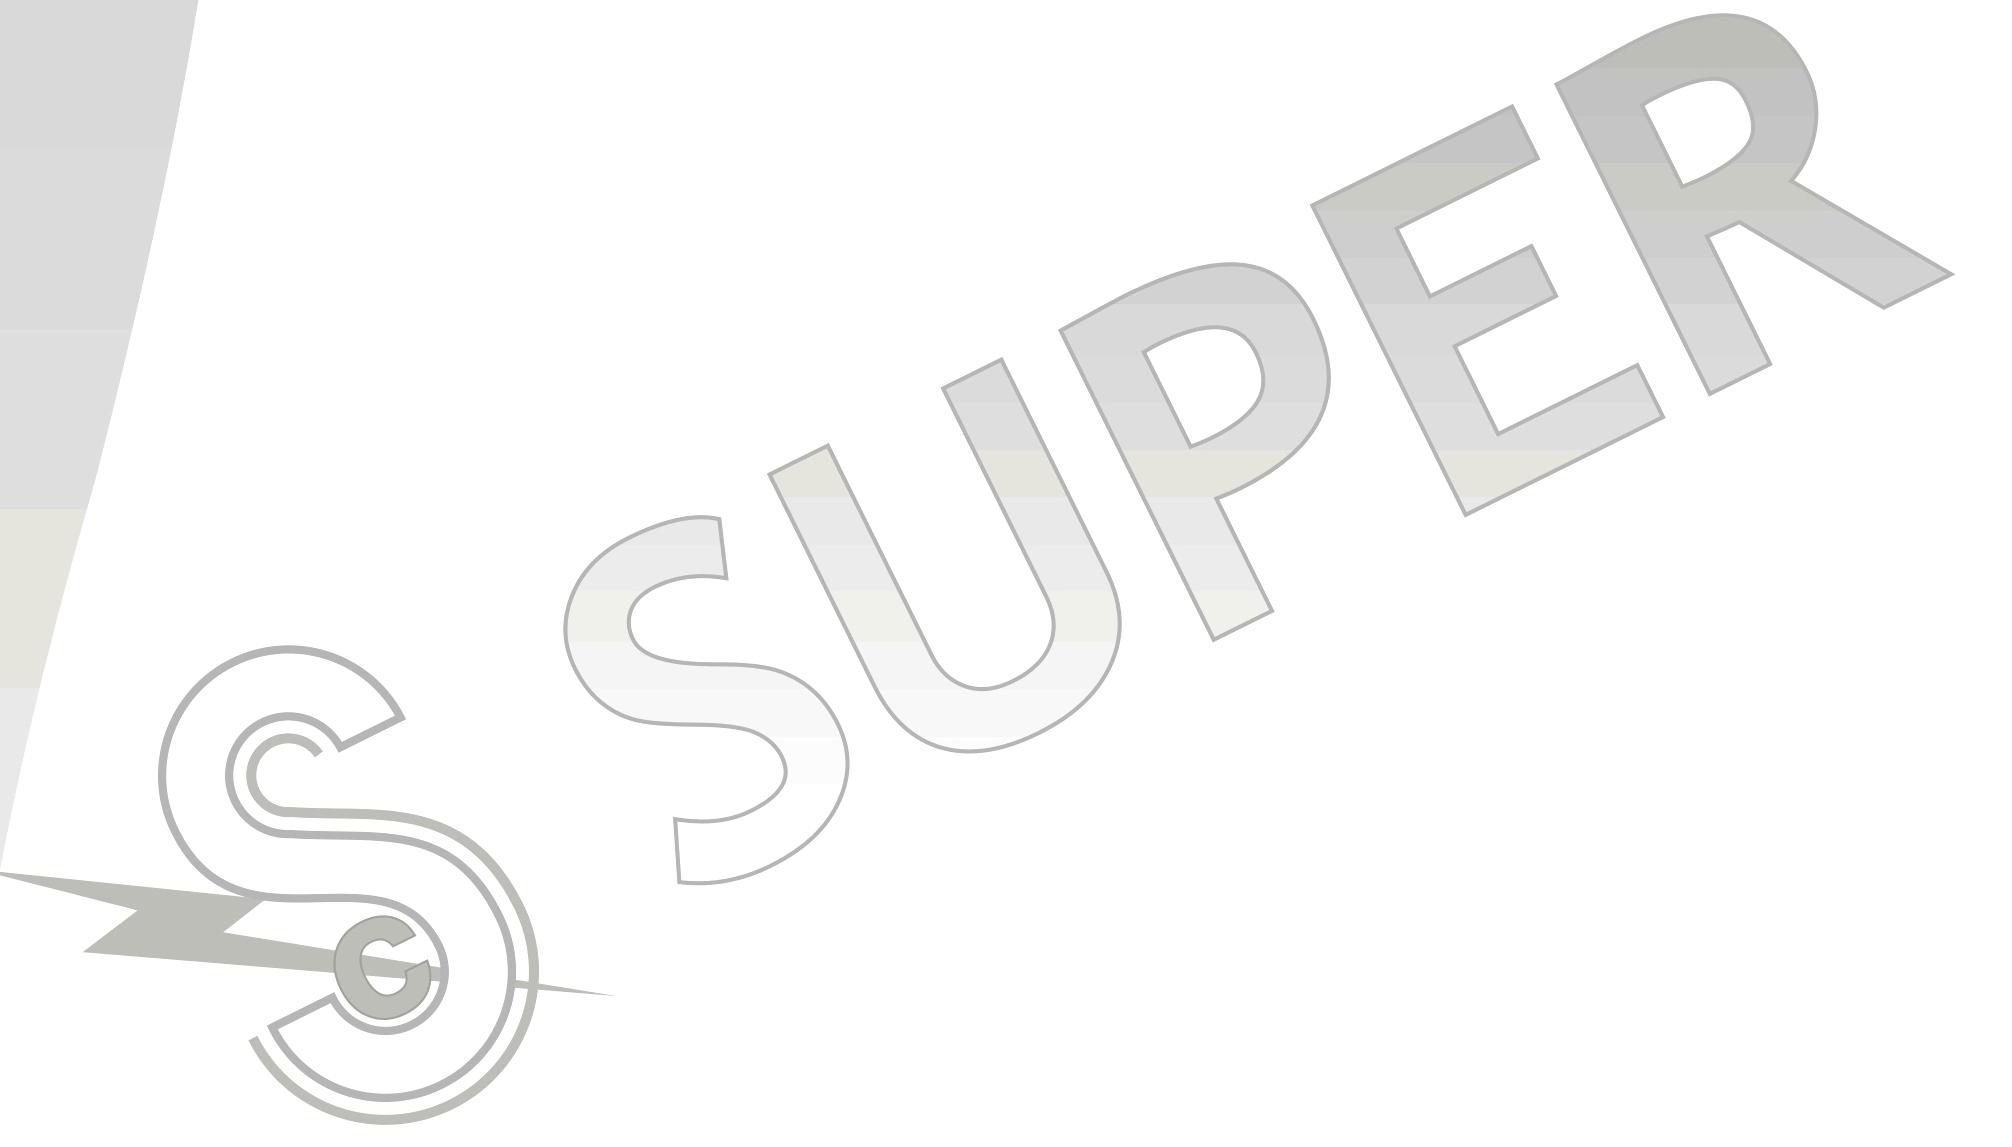 Super Sales Corporation